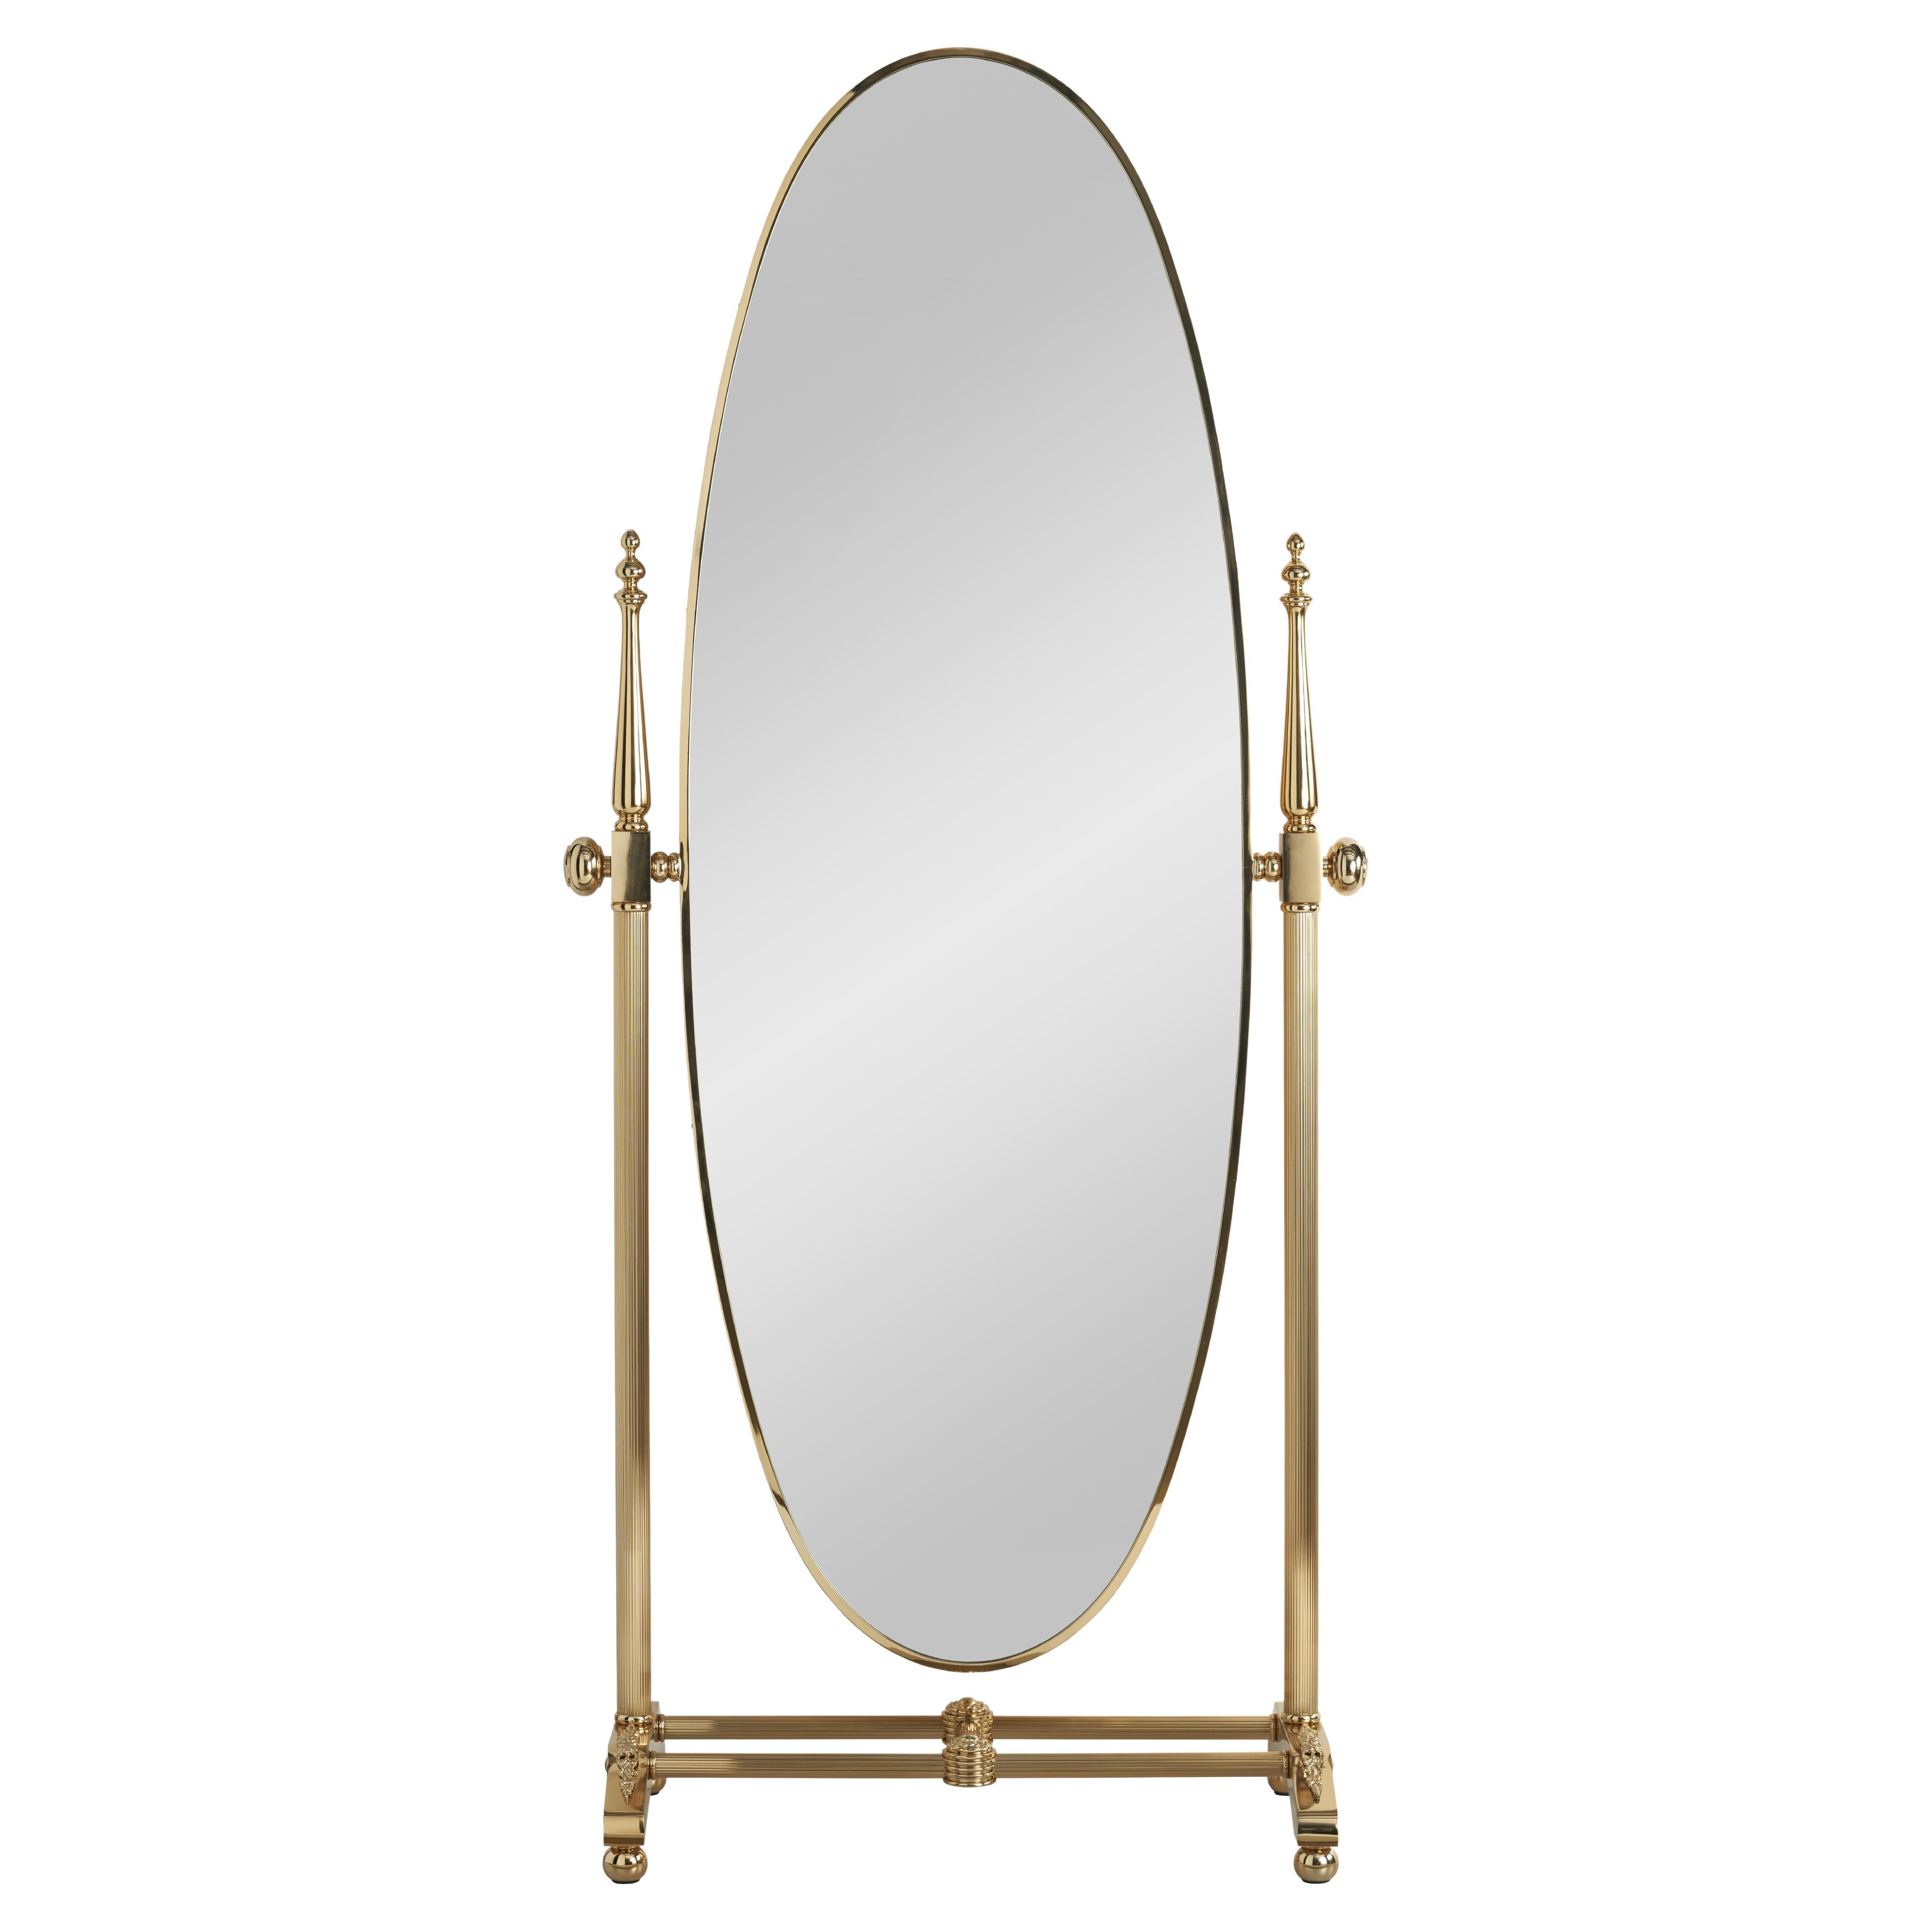 EL065 Miroir basculant autoportant en vente